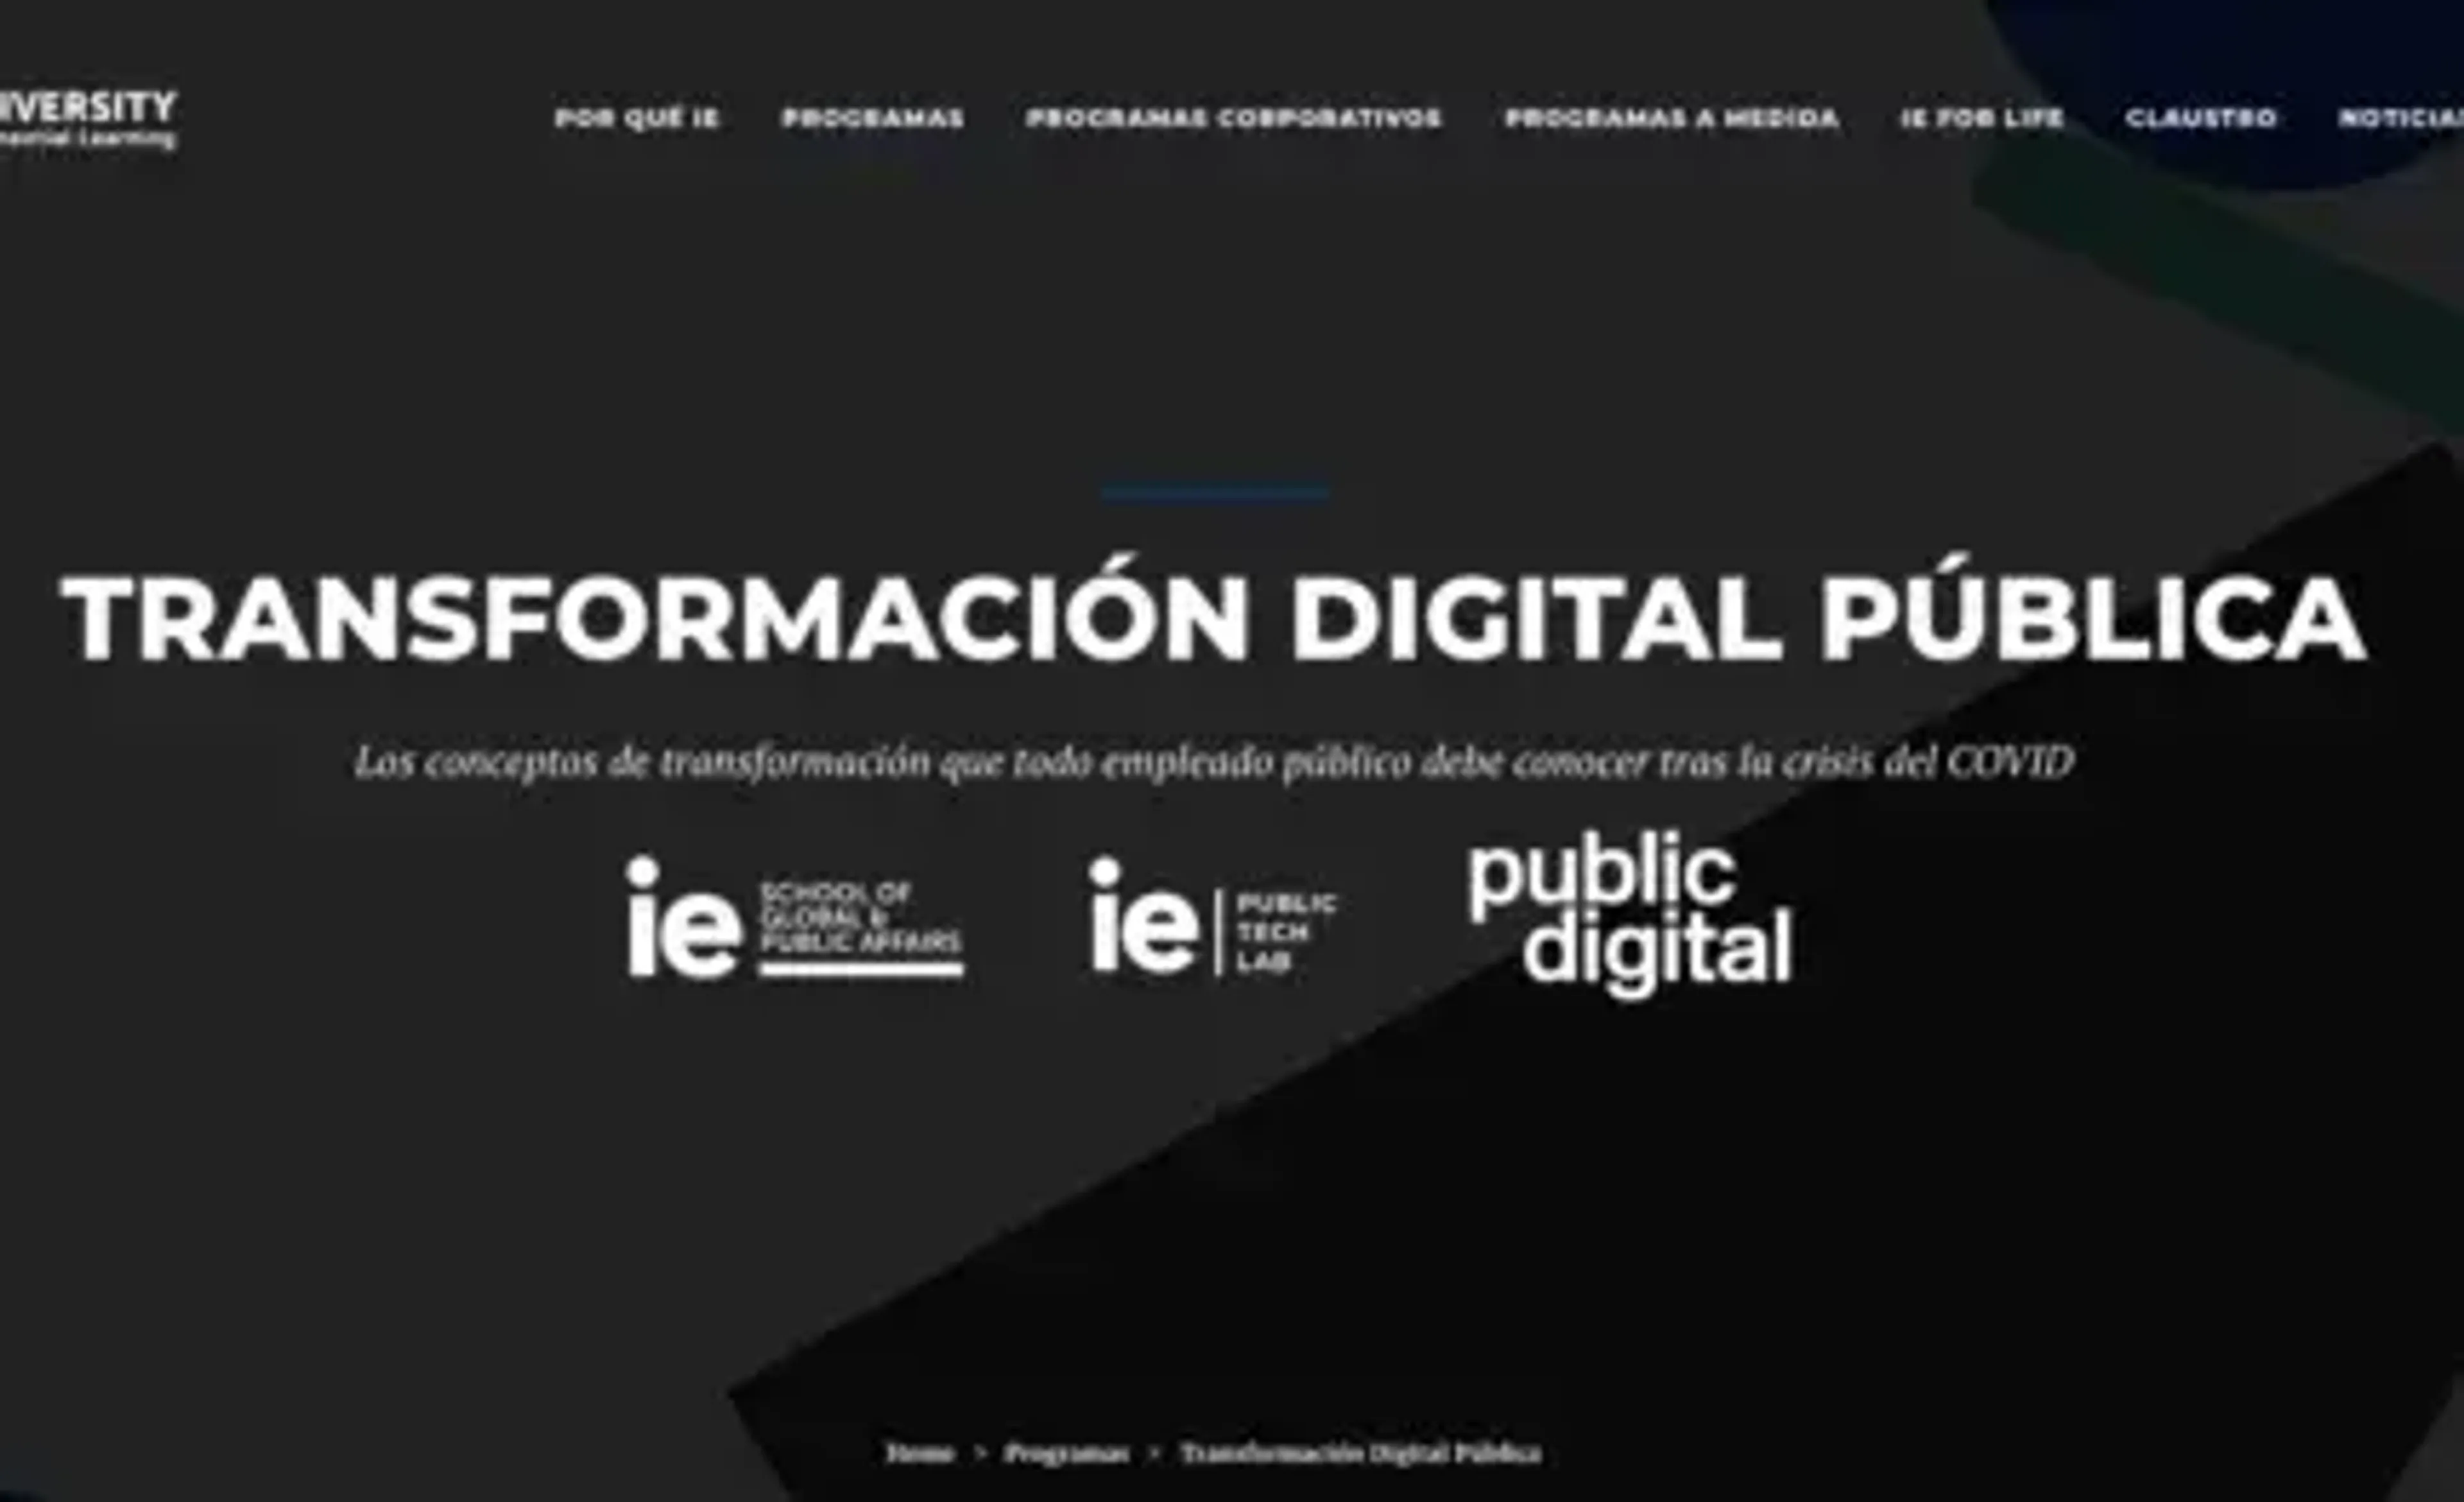 Digital transformation in Spain